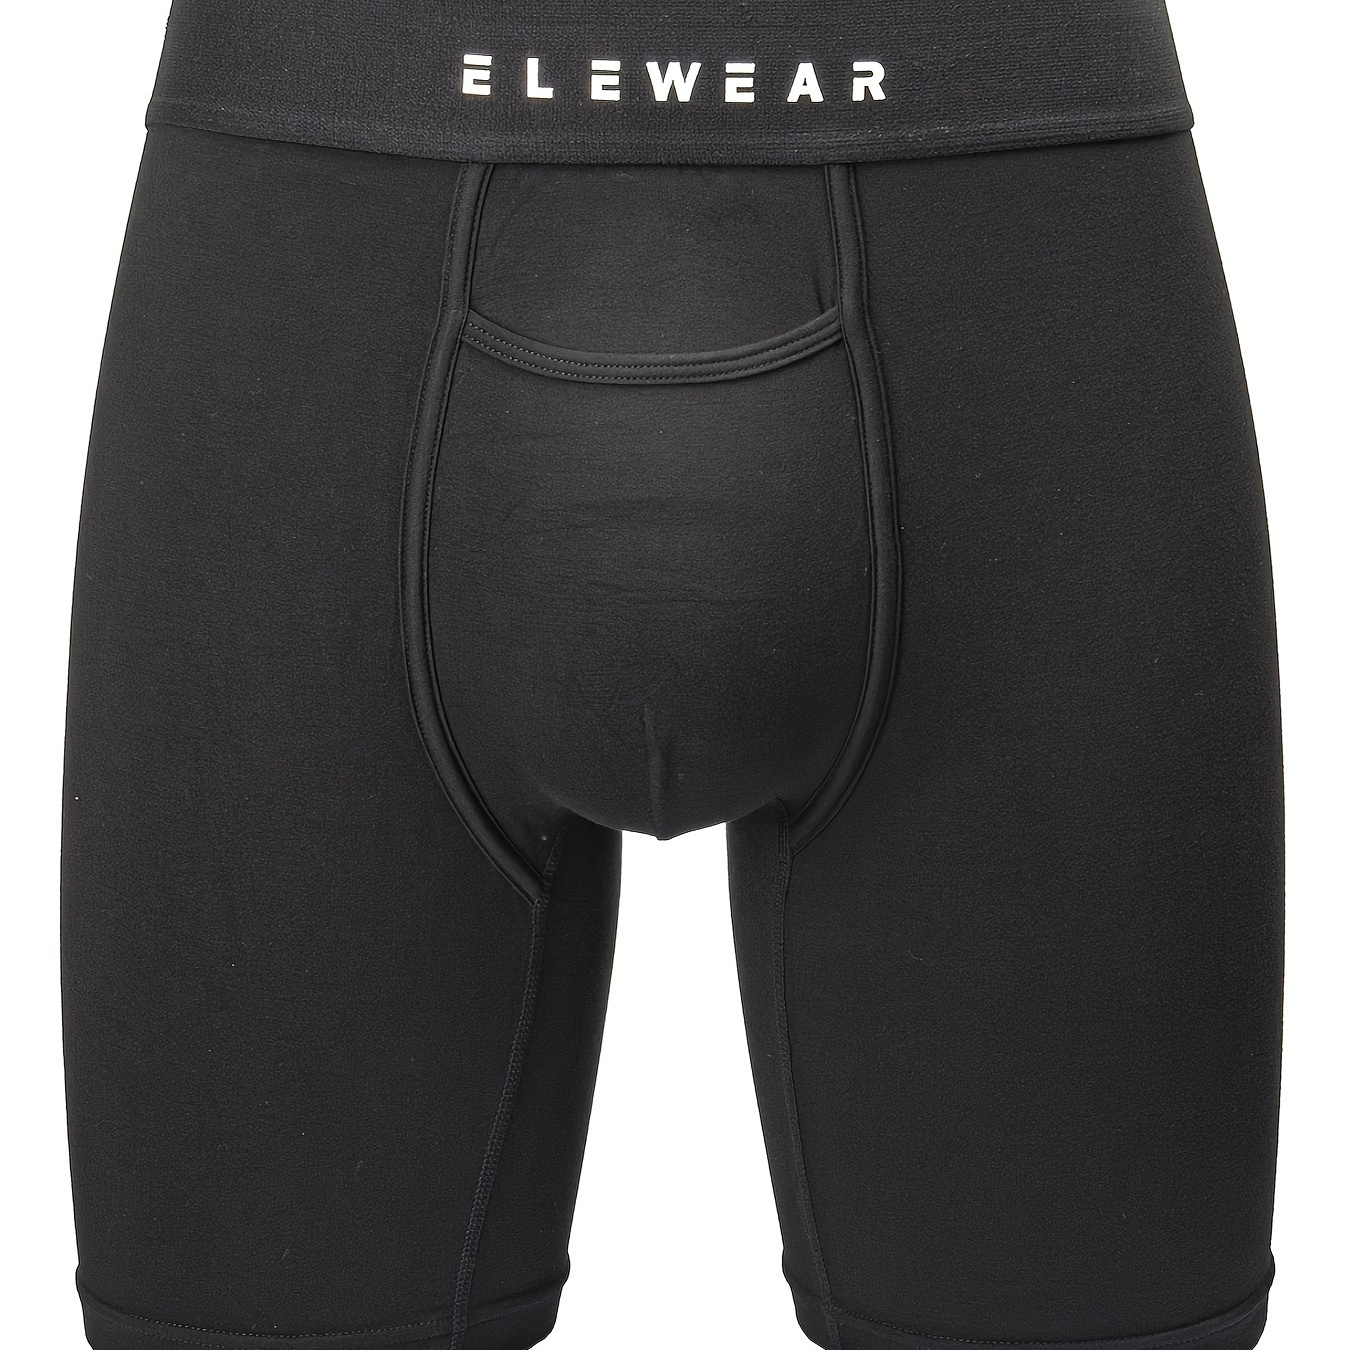 

Men's Fashion Modal Breathable Comfortable Long Boxers Briefs Underwear